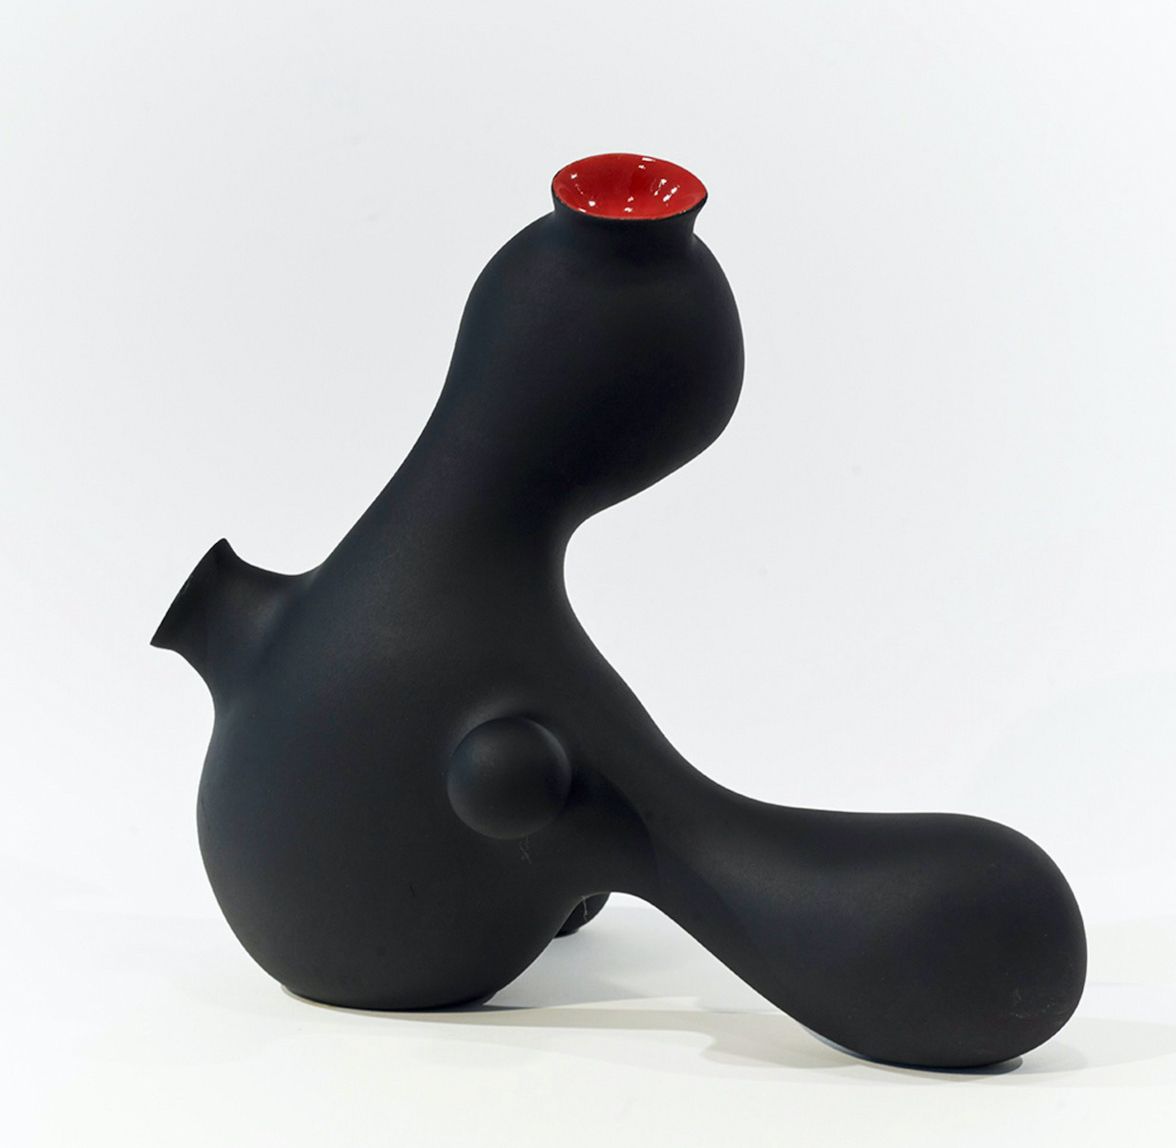 Pe Hagen abstrakte schwarze Skulptur kugelförmig